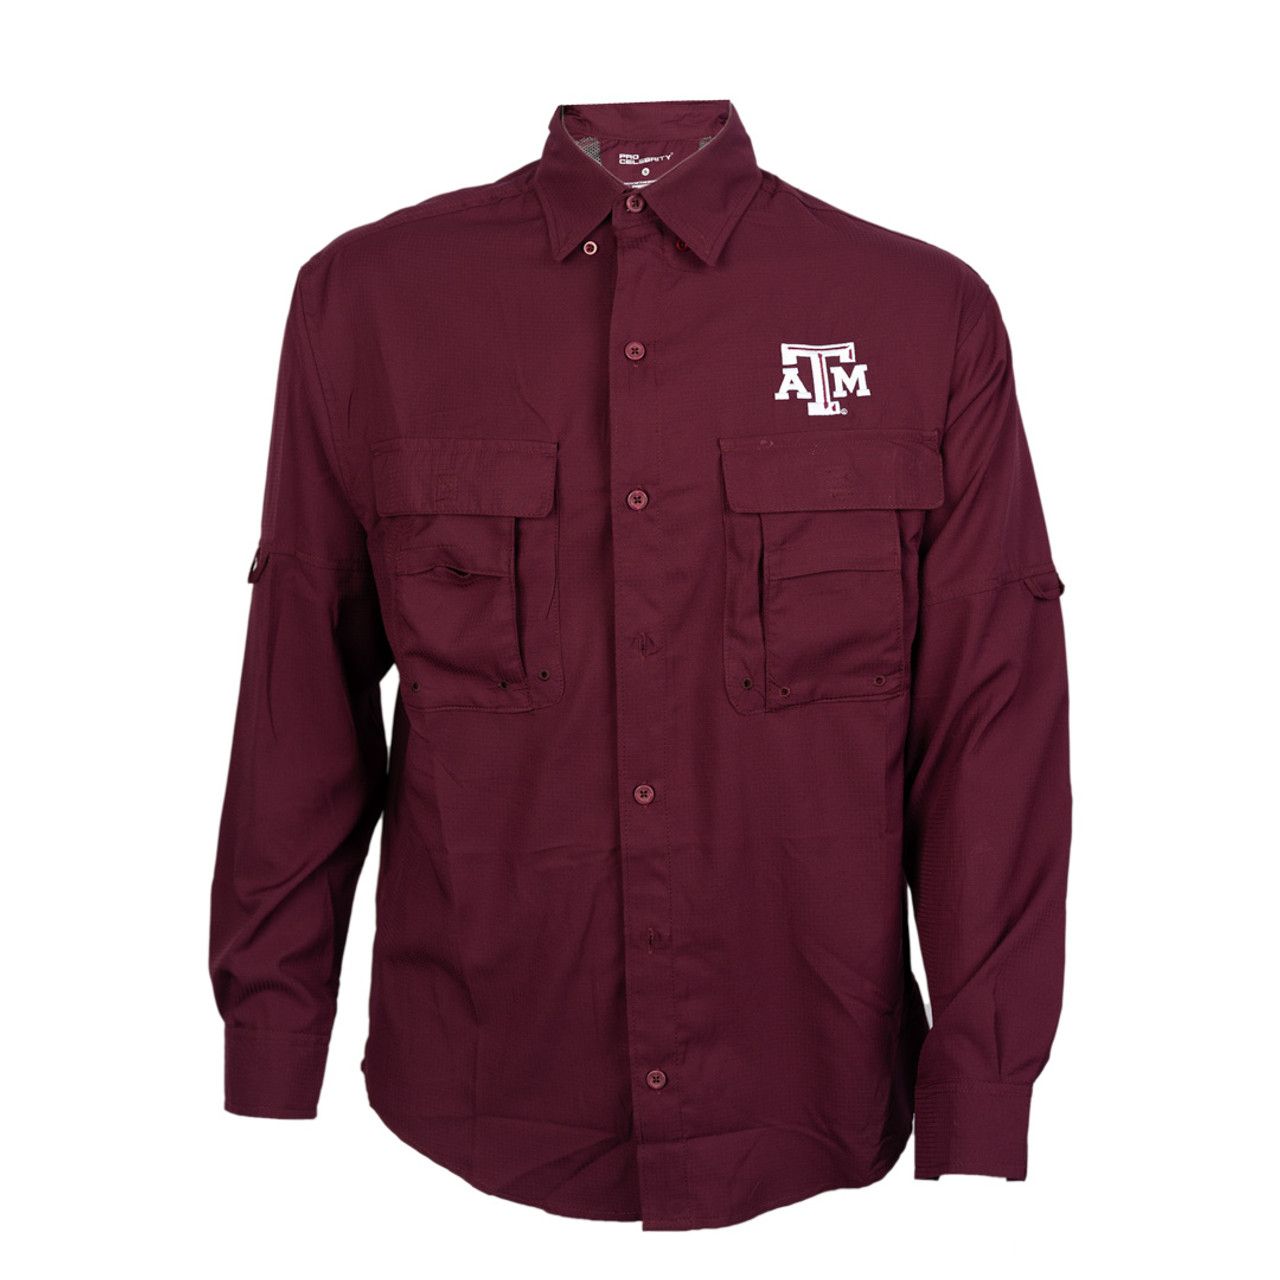 Texas A&M Fishing Shirt Long Sleeve - Maroon - The Warehouse at C.C.  Creations